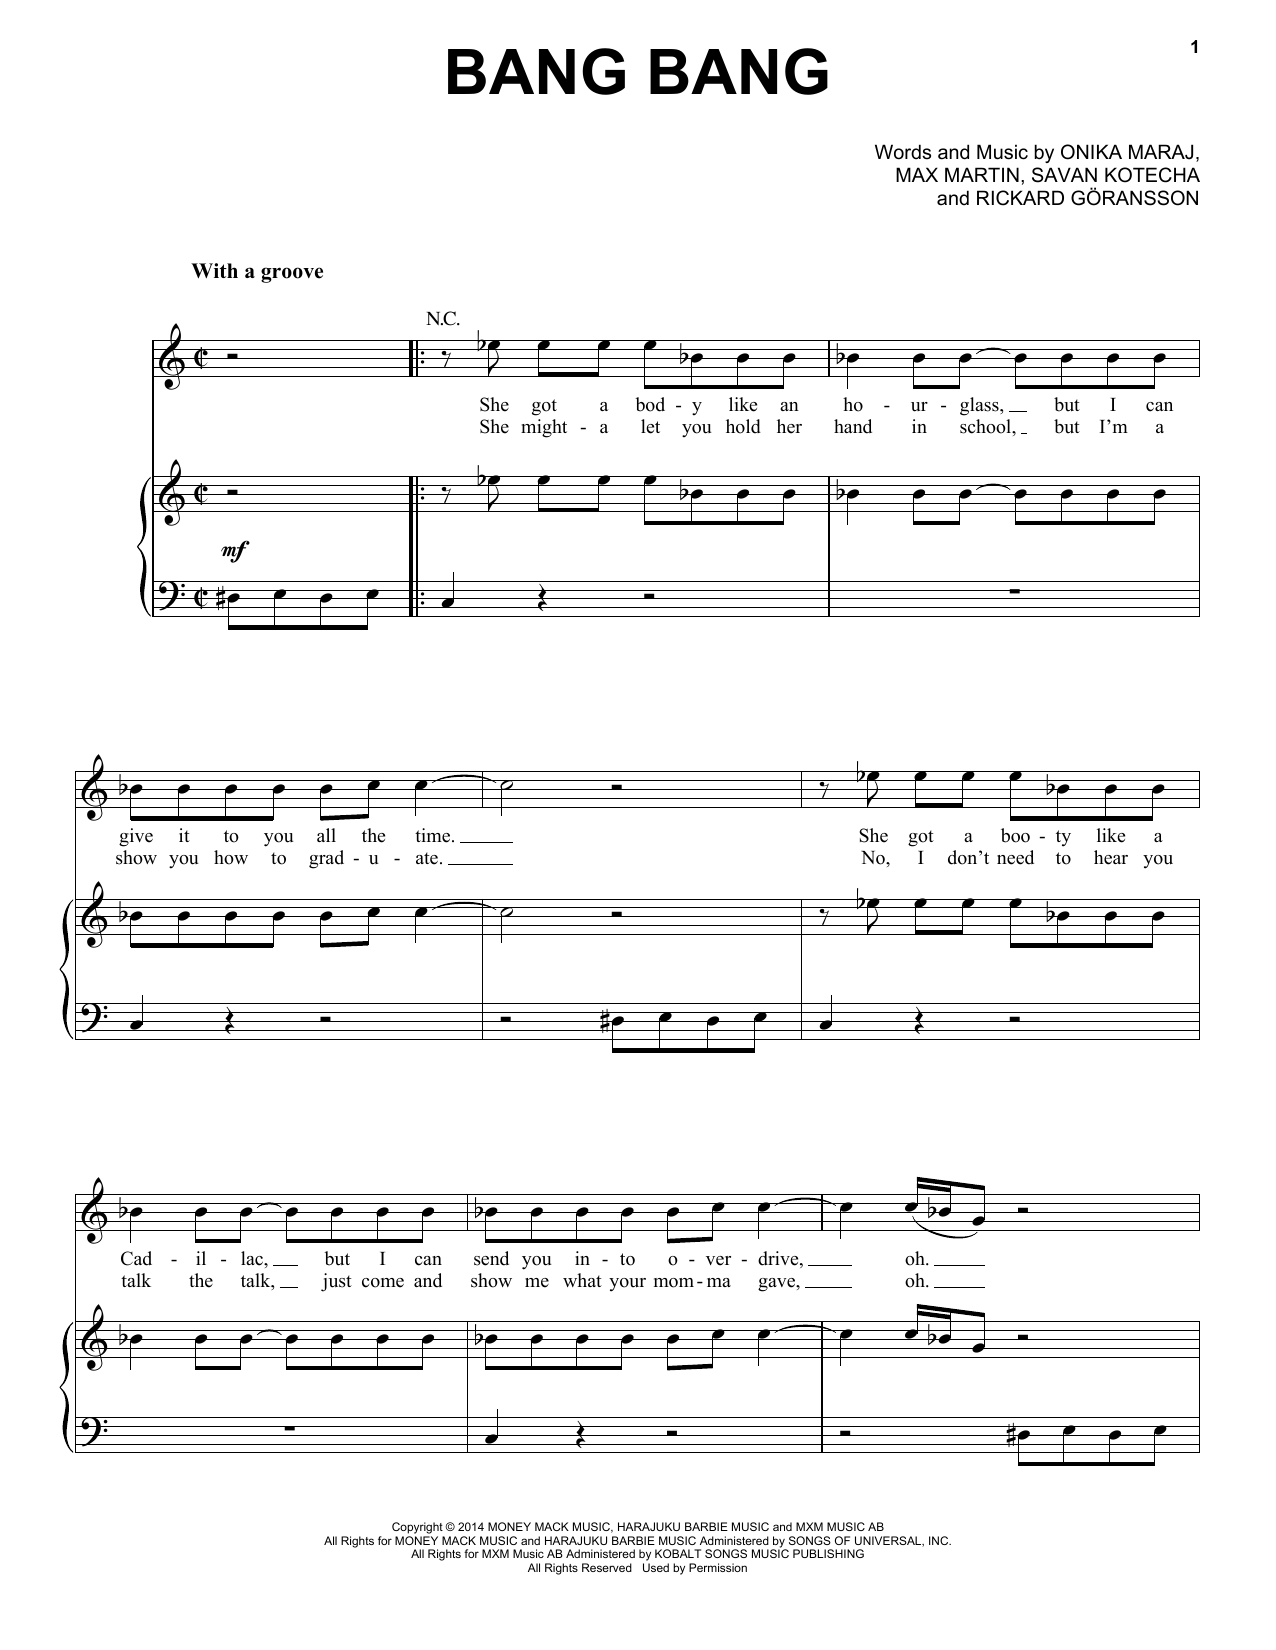 Download Jessie J, Ariana Grande & Nicki Minaj Bang Bang Sheet Music and learn how to play Easy Piano PDF digital score in minutes